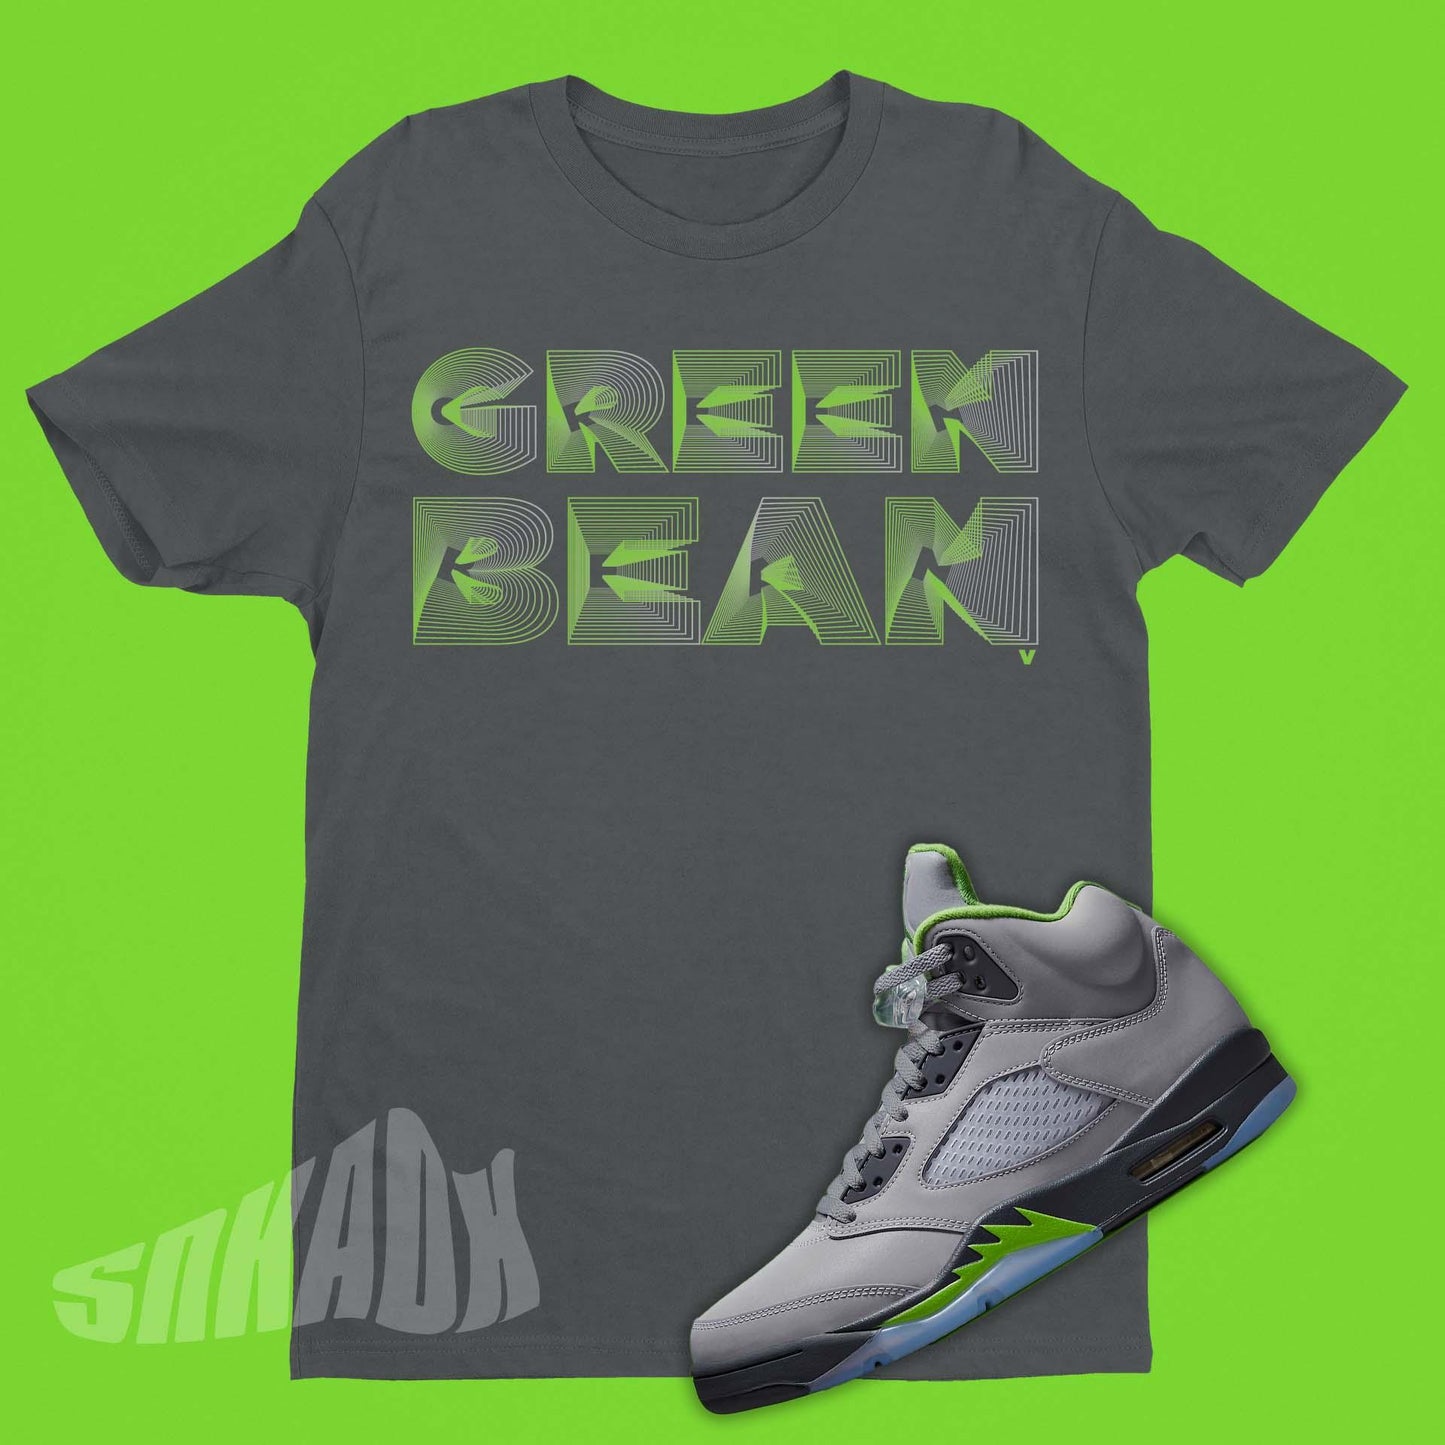 Green Bean 5s shirts.